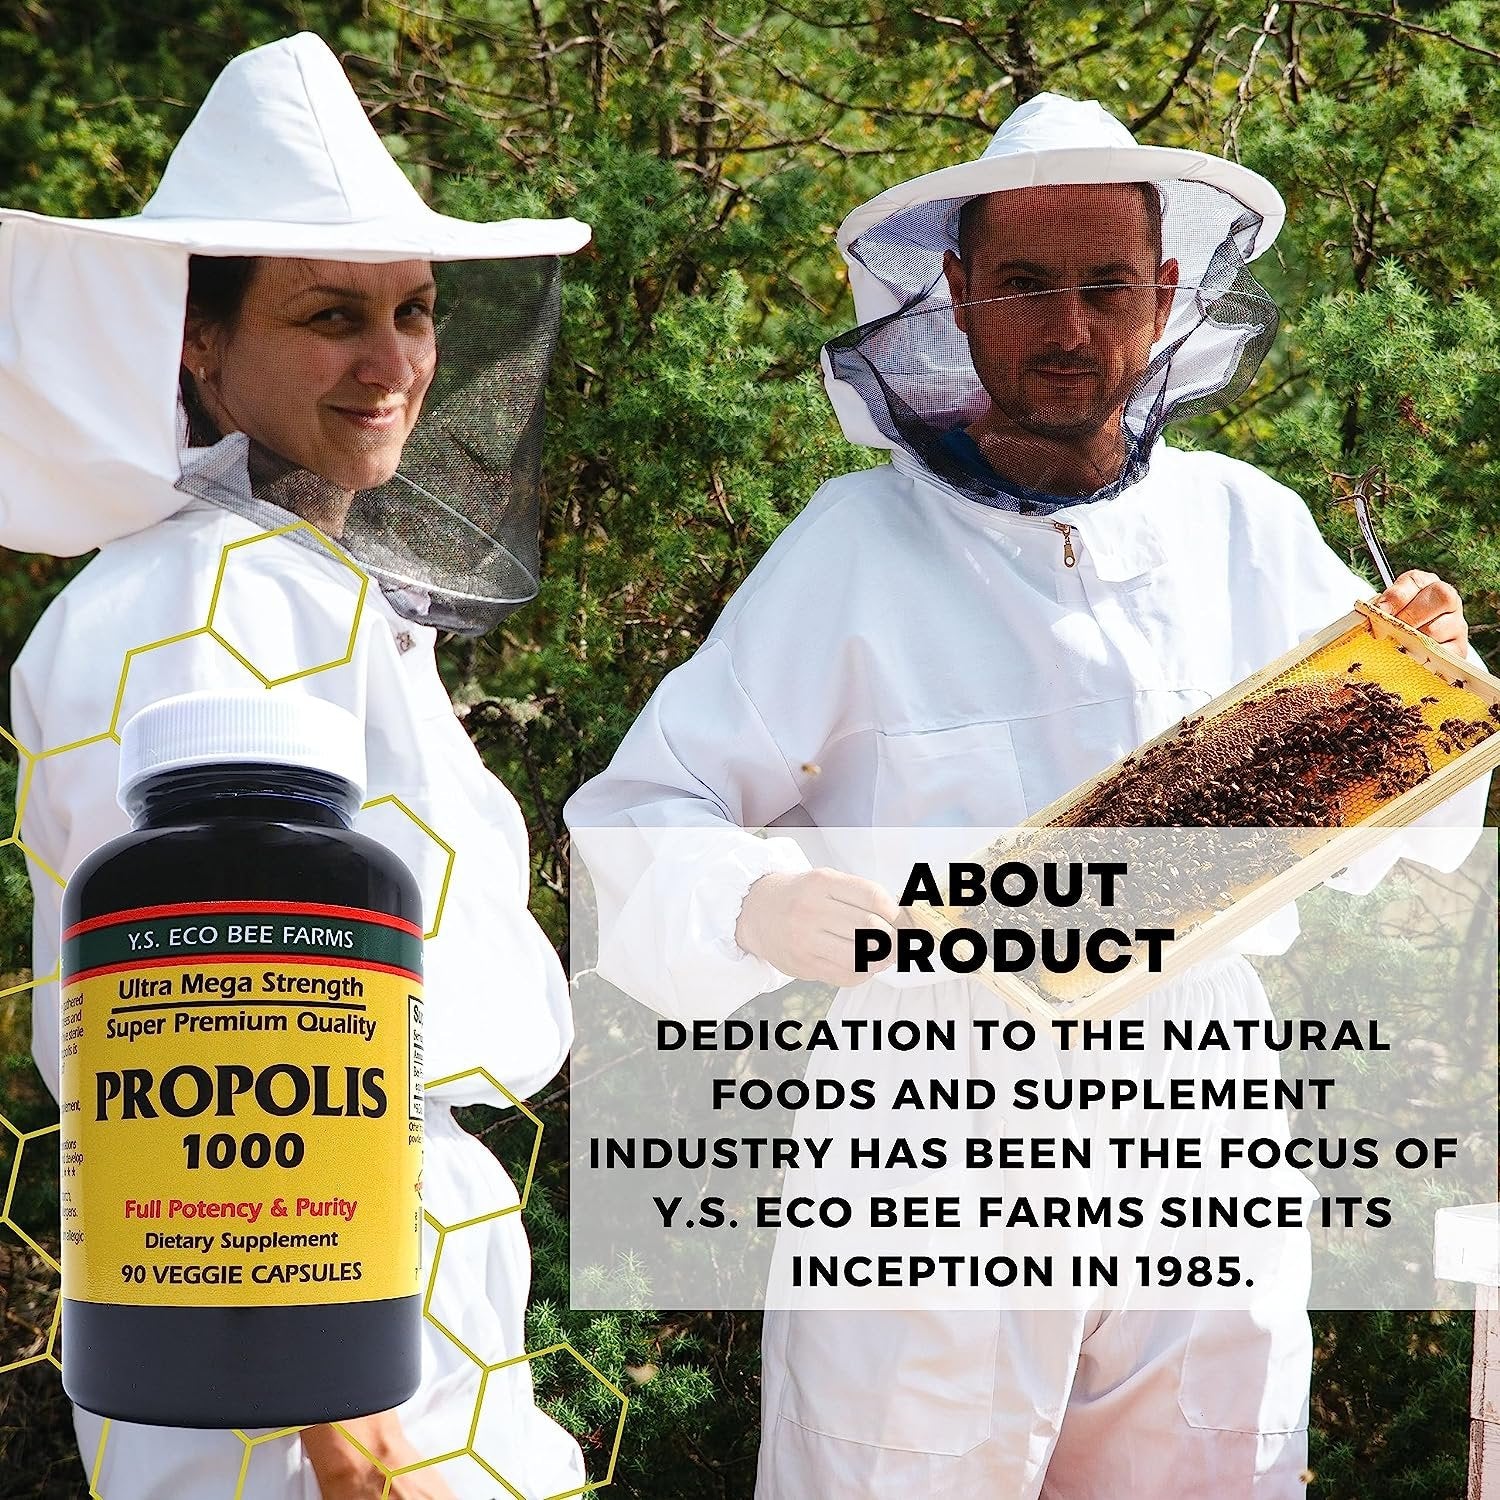 Y.S. Organic Bee Farms Propolis-Raw Unprocessed 1000mg - Your Gateway to Wellness - 90 Capsules with Bonus worldwidenutrition Multi Purpose Key Chain